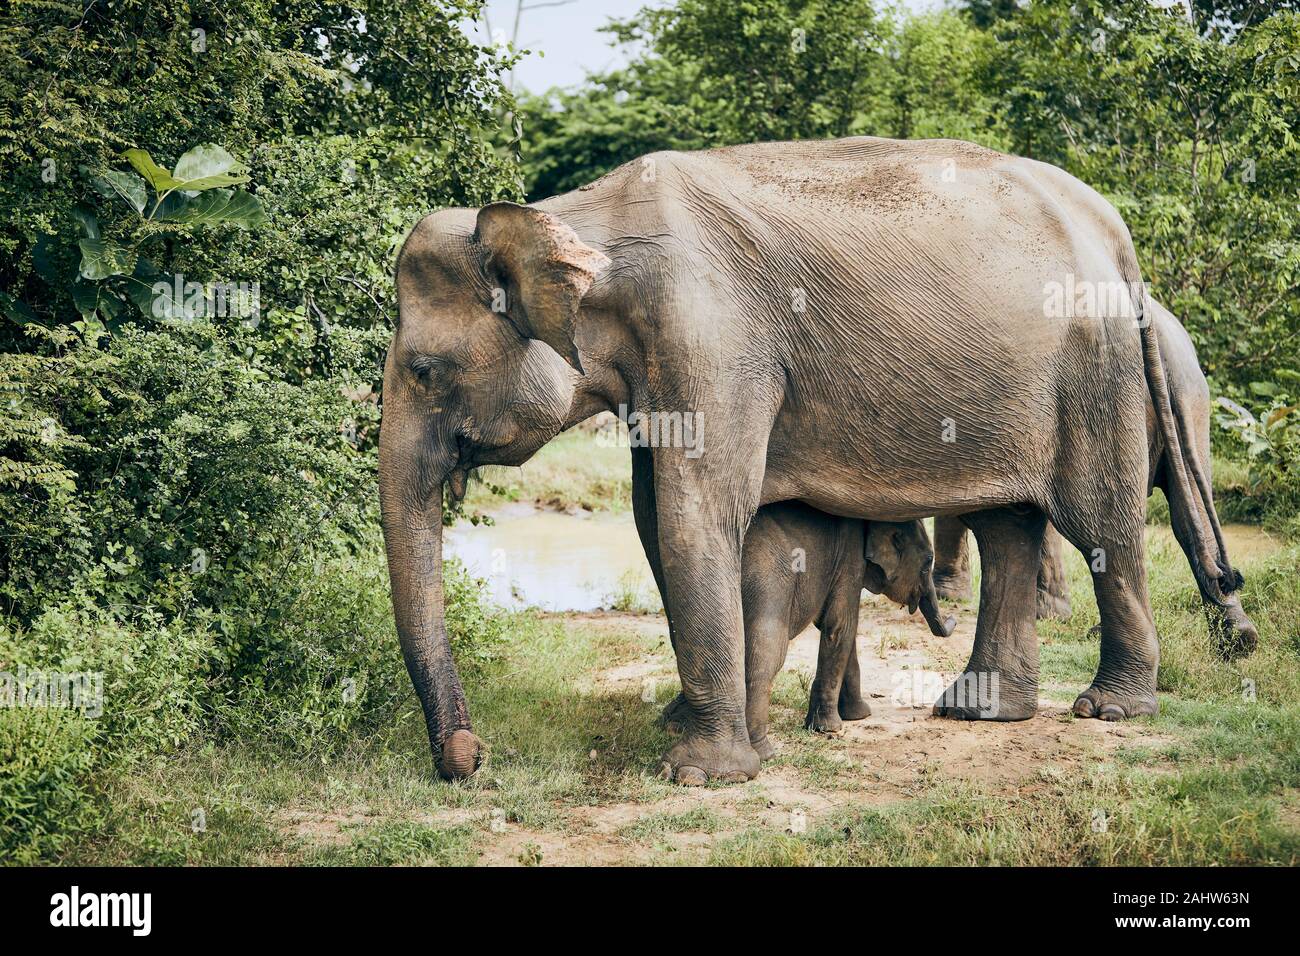 Elephant mother with baby. Wildlife animals in Sri Lanka. Stock Photo